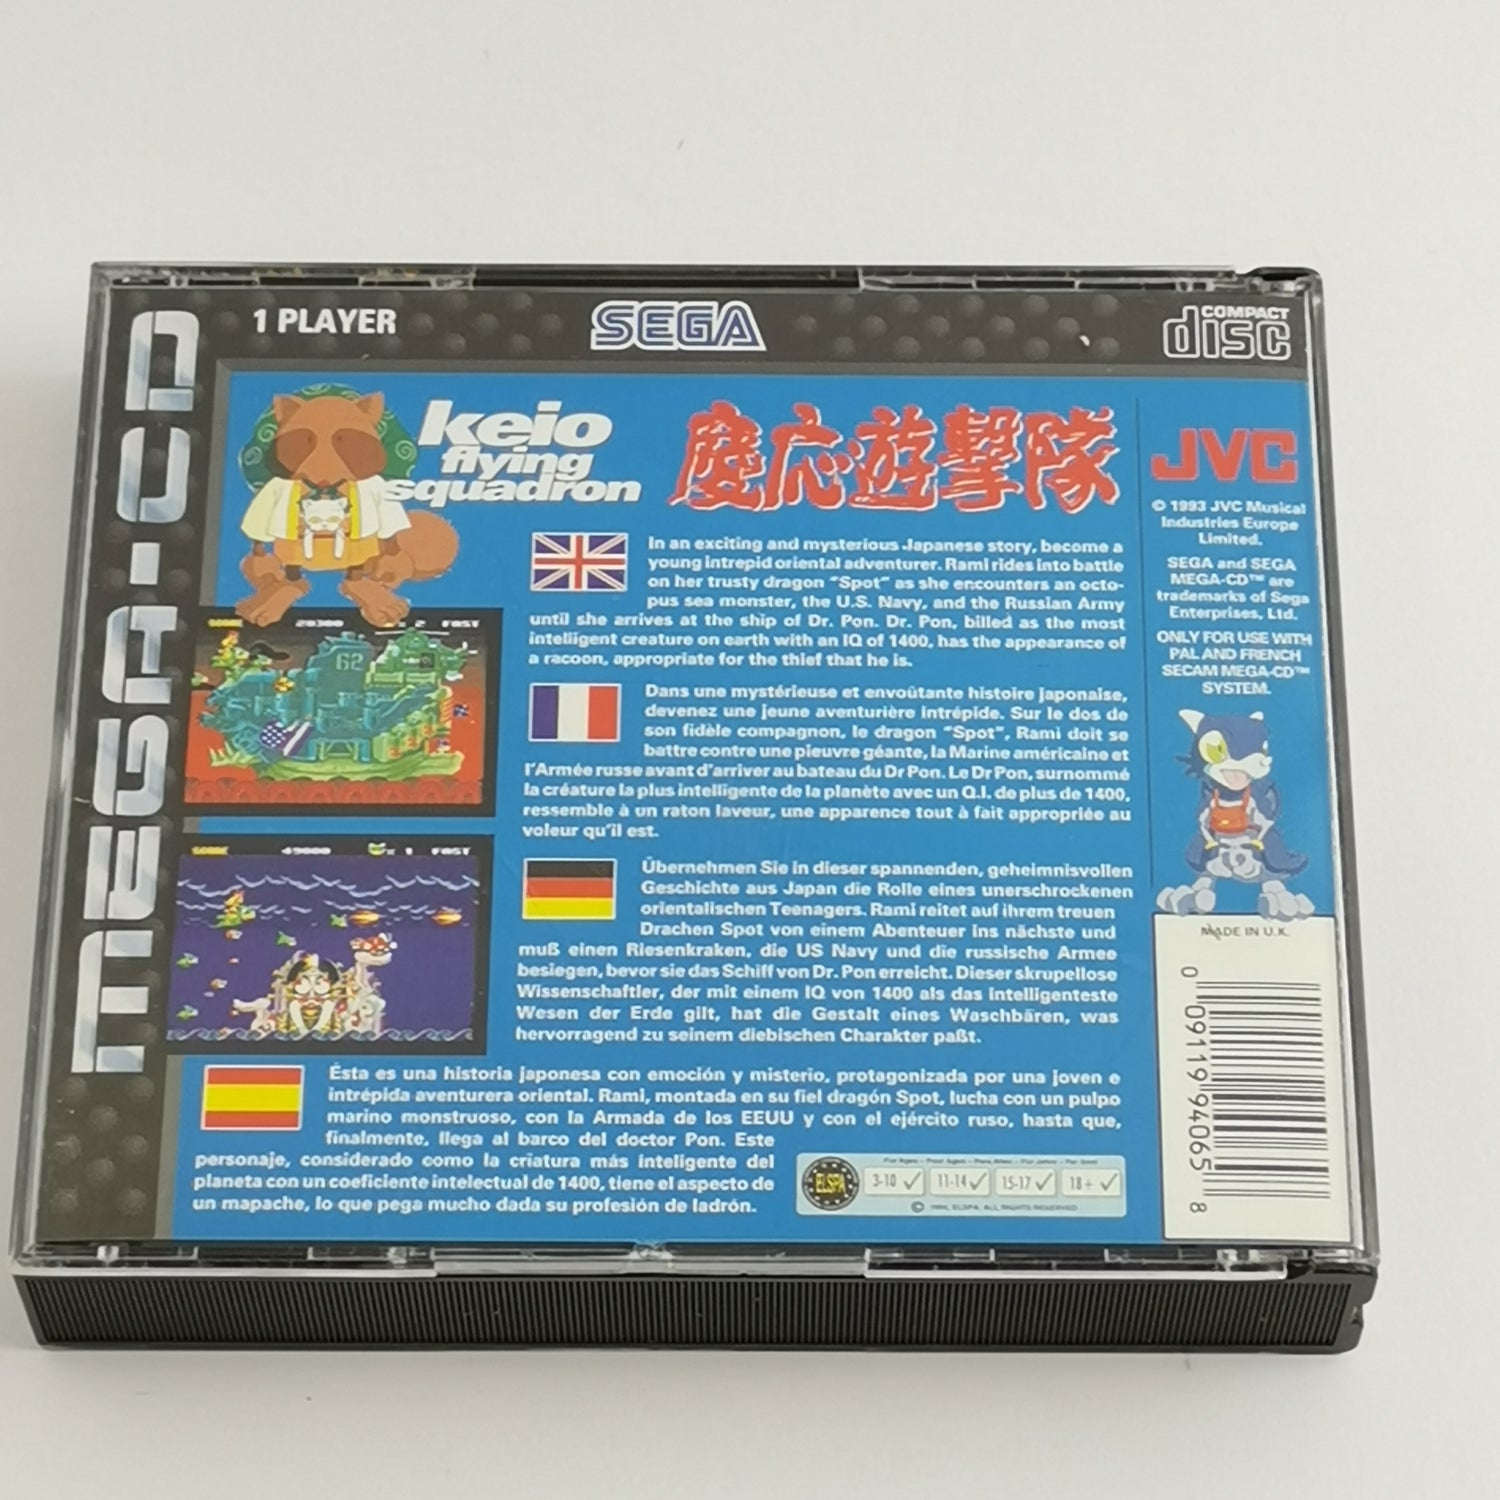 Sega Mega CD game: Keio Flying Squadron - original packaging & instructions PAL | MC disc system